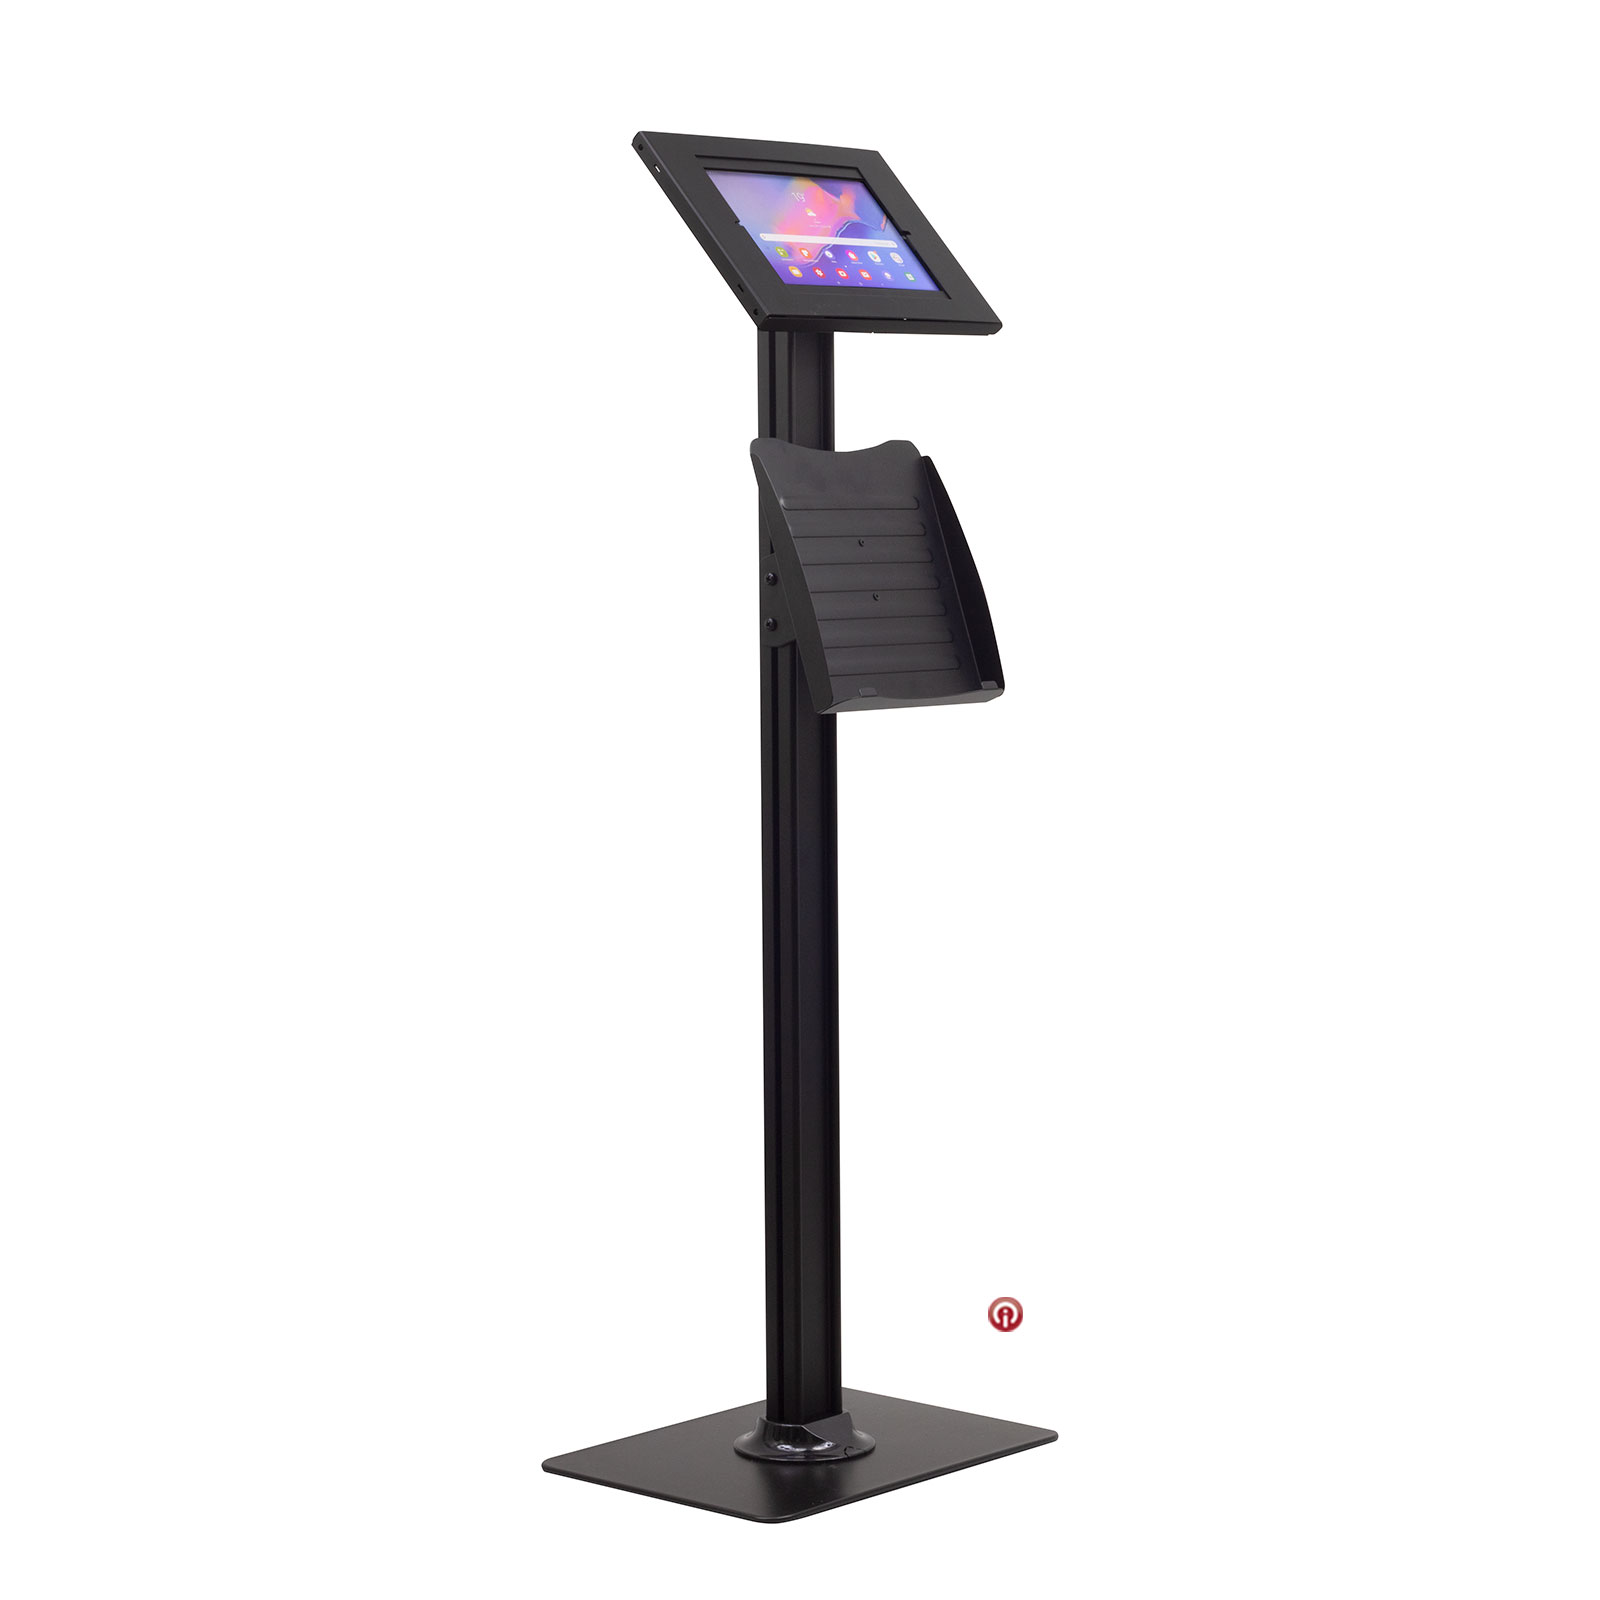 TSCLK14 soporte base kiosko pedestal universal seguridad antirrobo para  iPad y tablets de 9 a 11 pulgadas